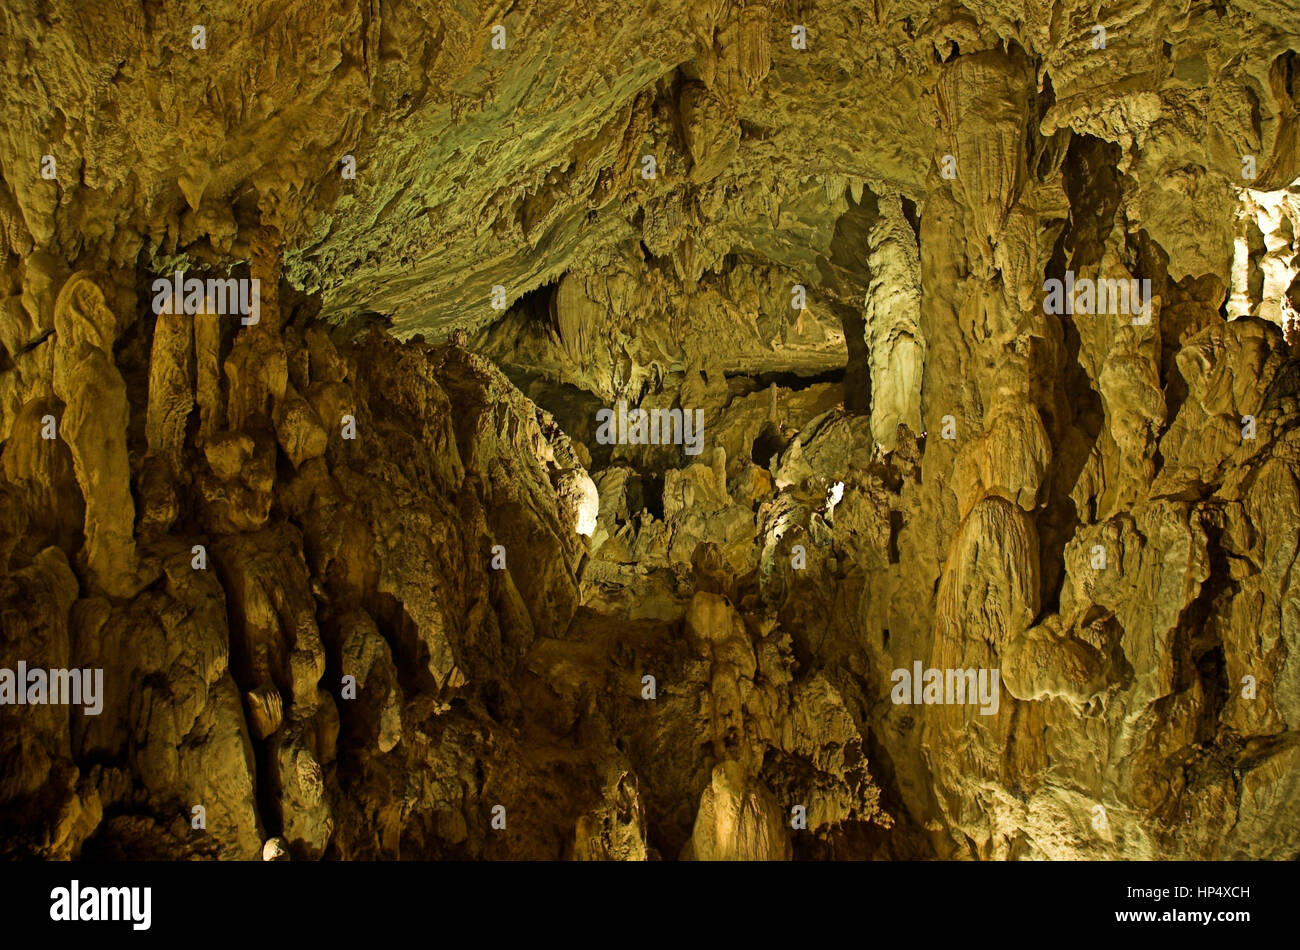 Cave's structures. Gunung mulu national park, sarawak, borneo, malaysia. Stock Photo